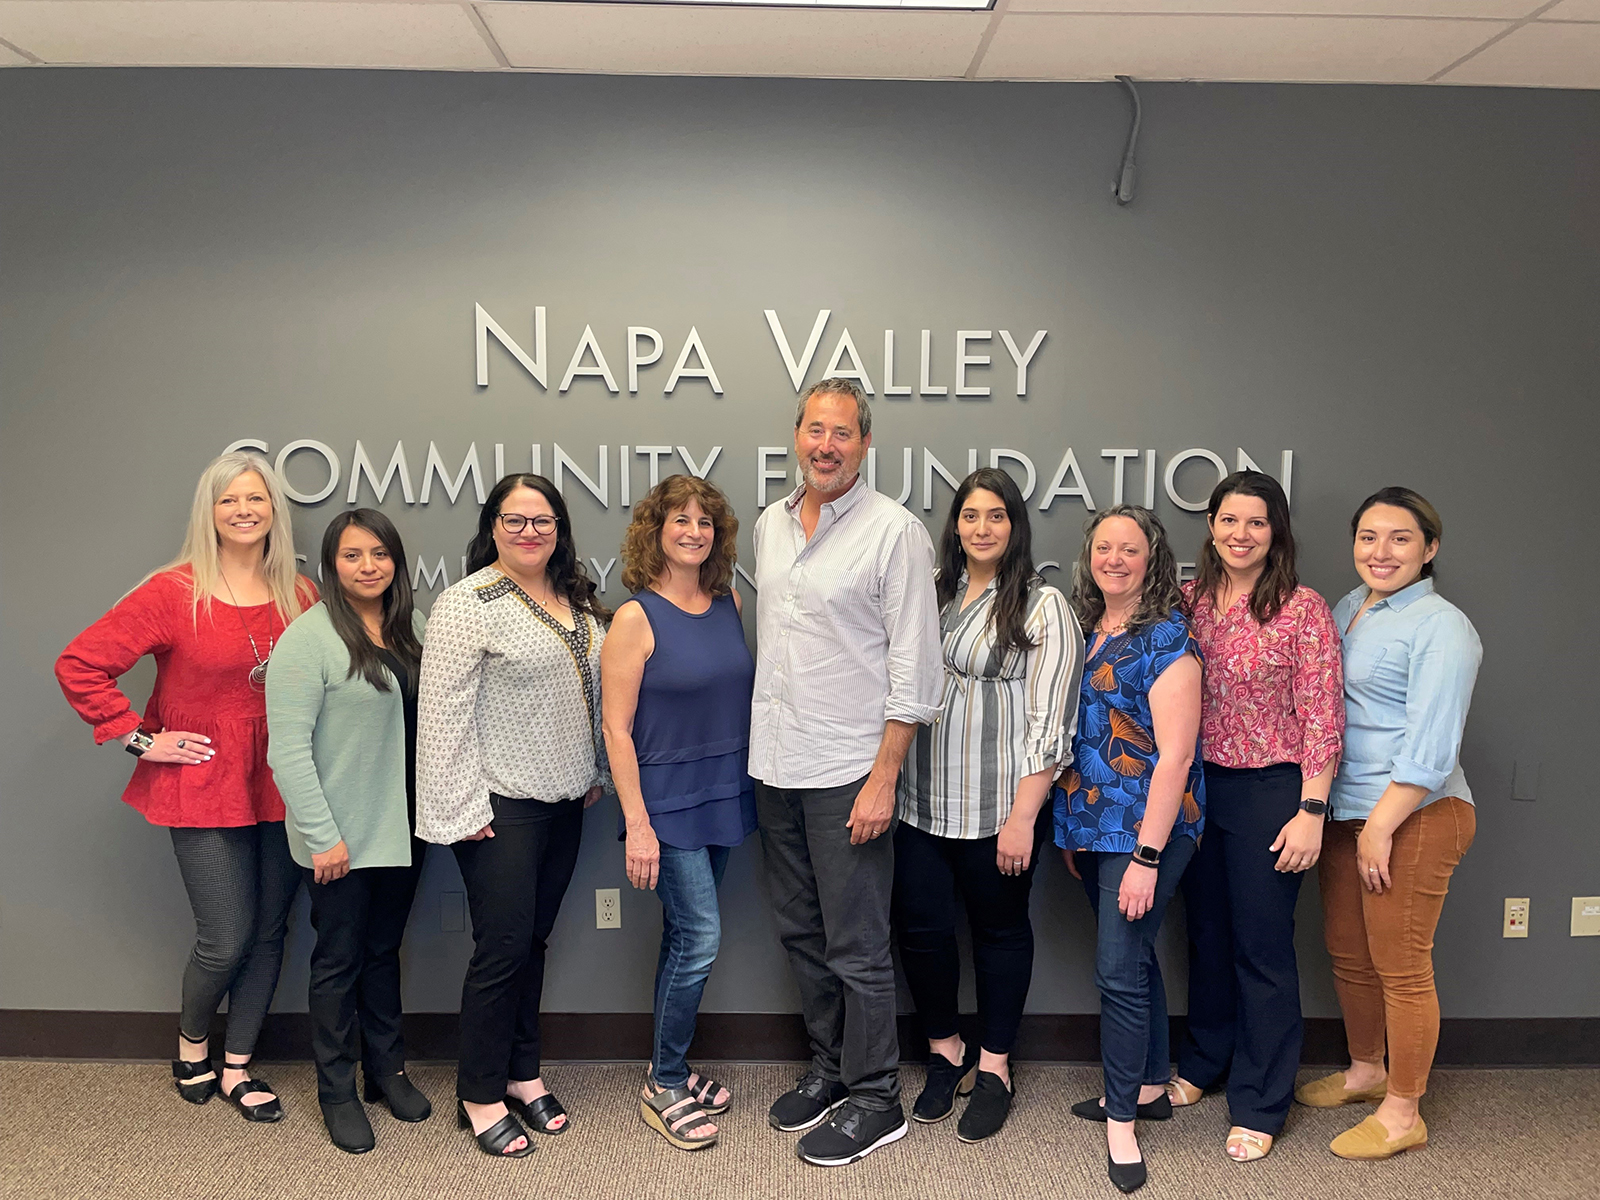 A partner in regional disaster preparedness: Napa Valley Community Foundation